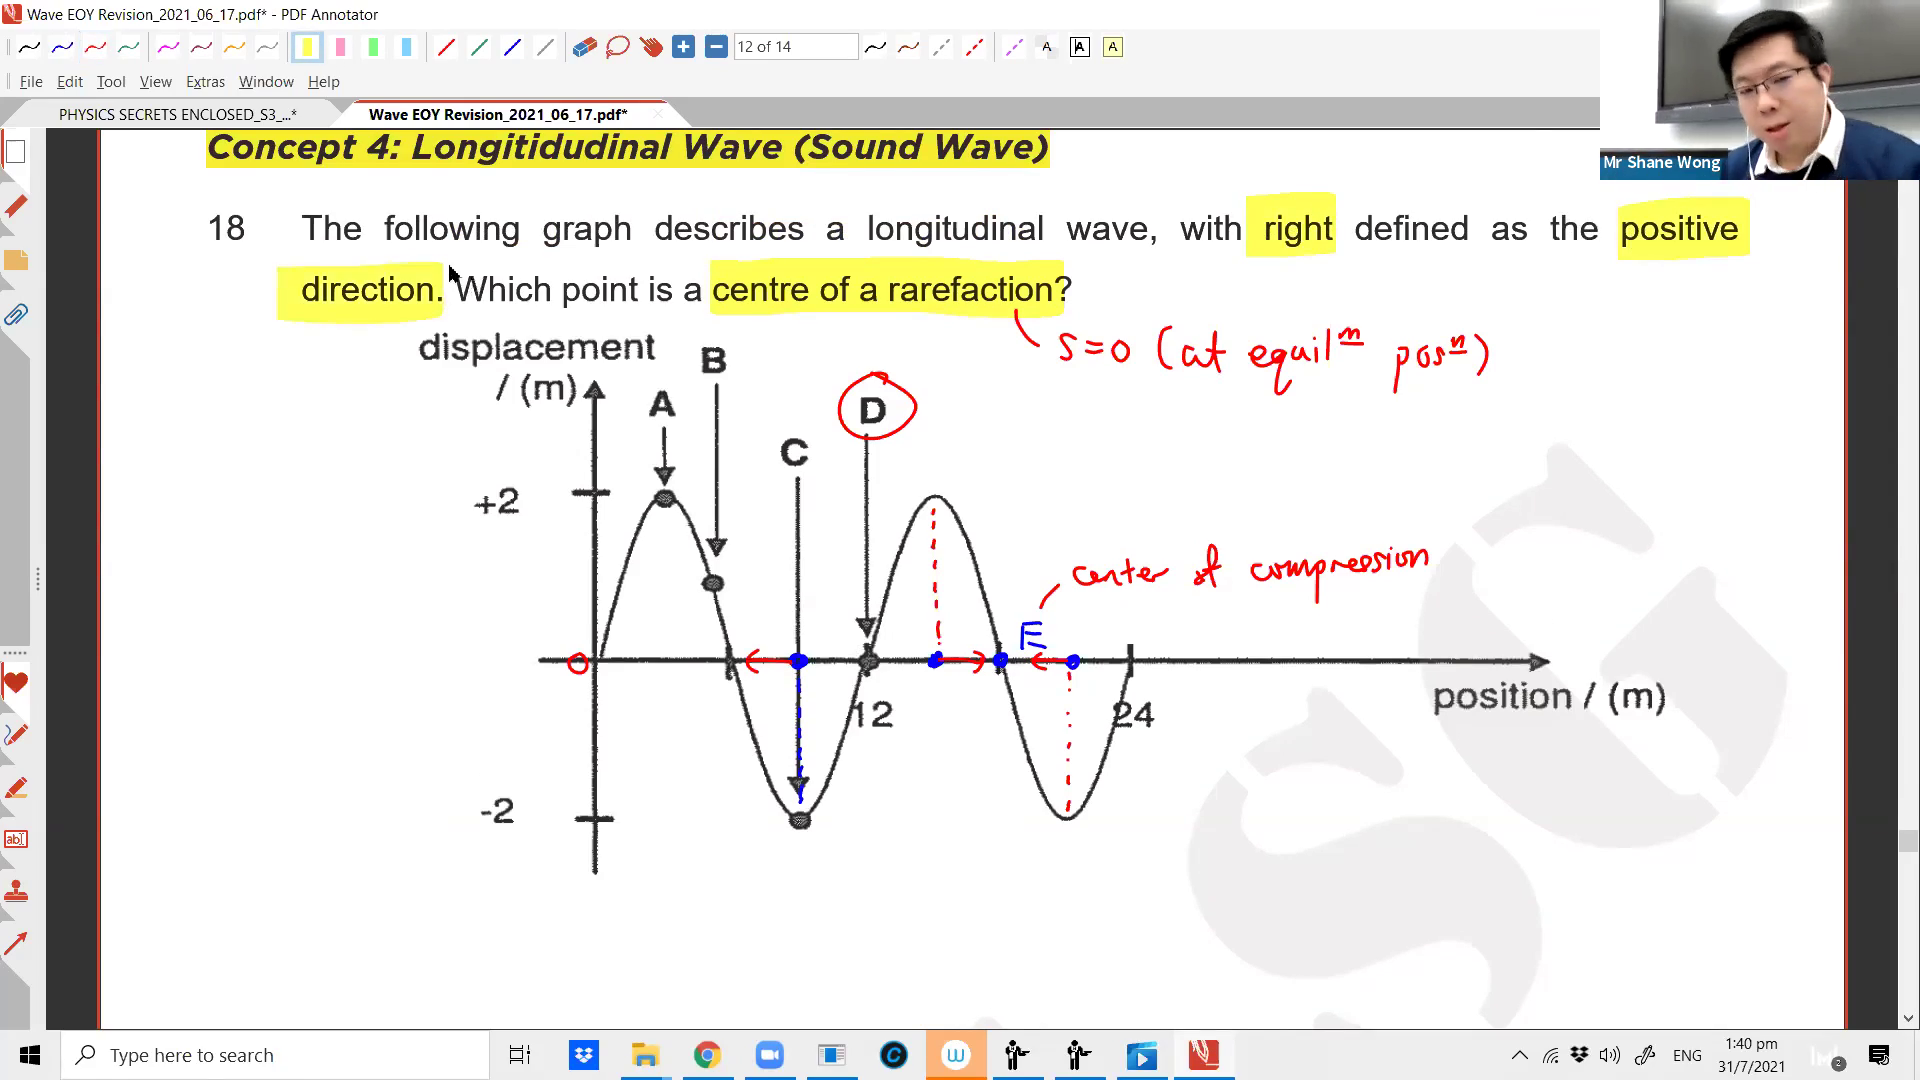 [WAVES] Transverse vs Longitudinal Waves